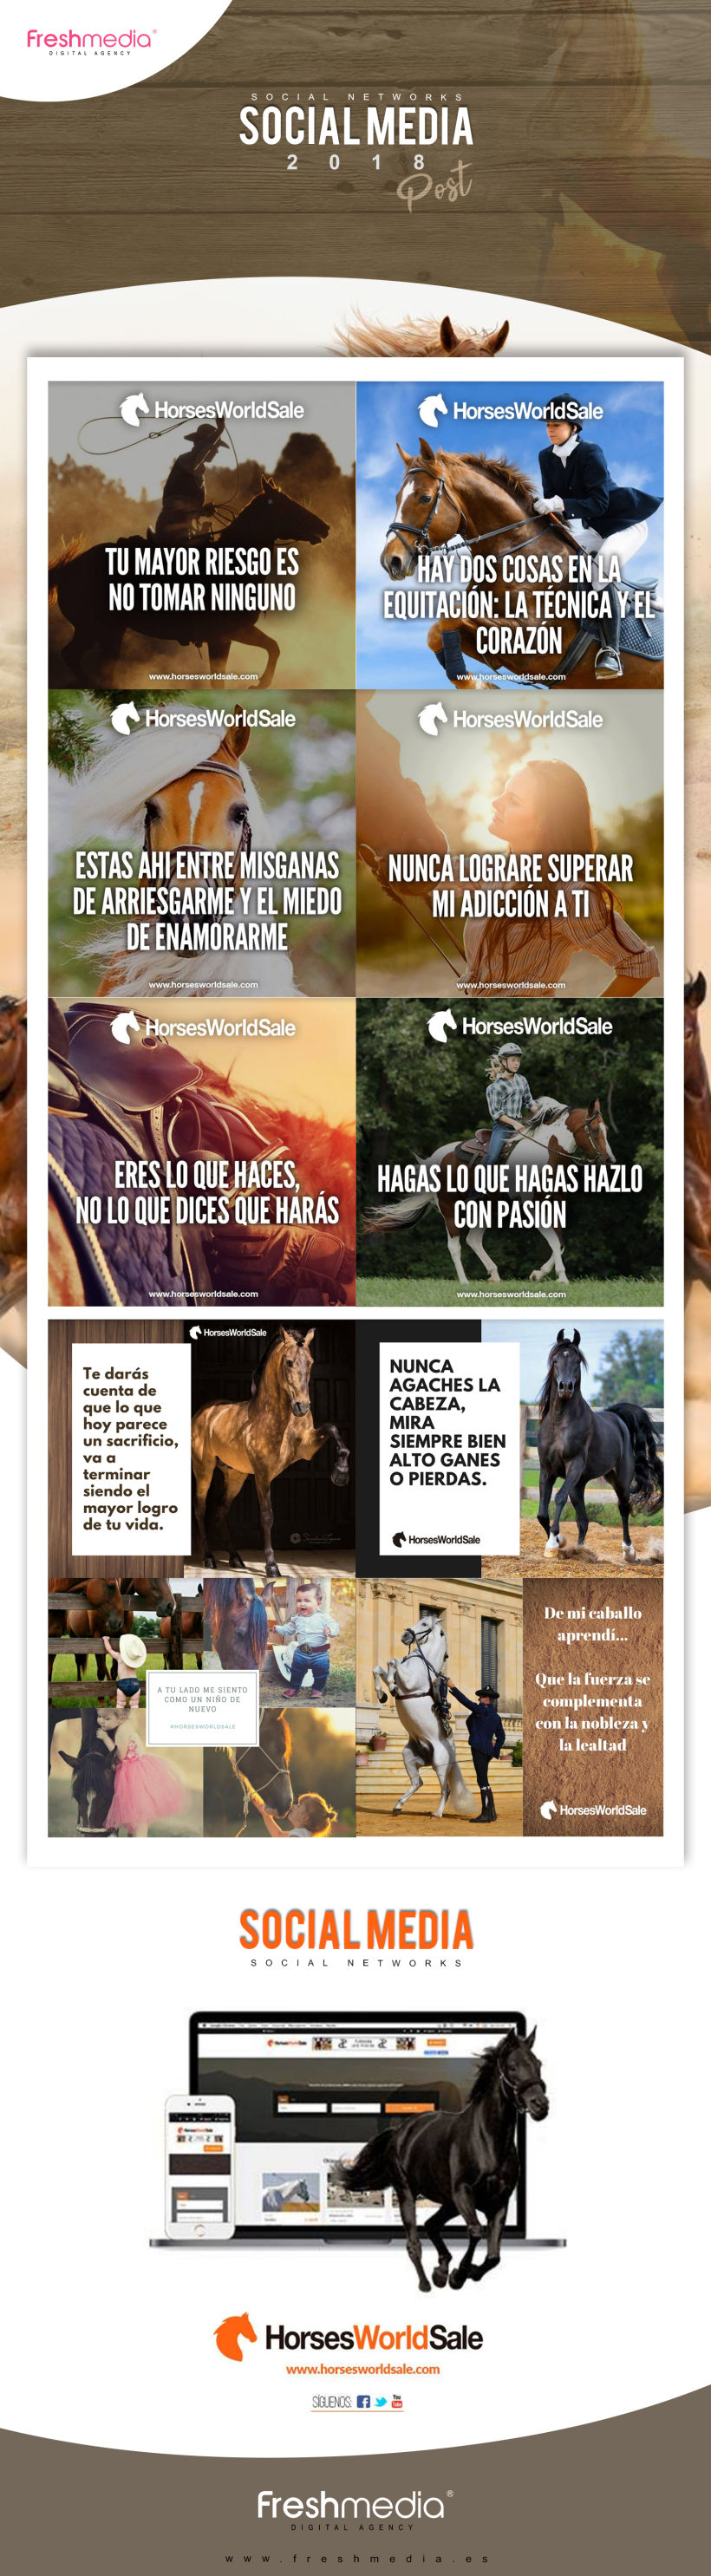 Social Media Horses World Sale imagenes Redes Sociales -1